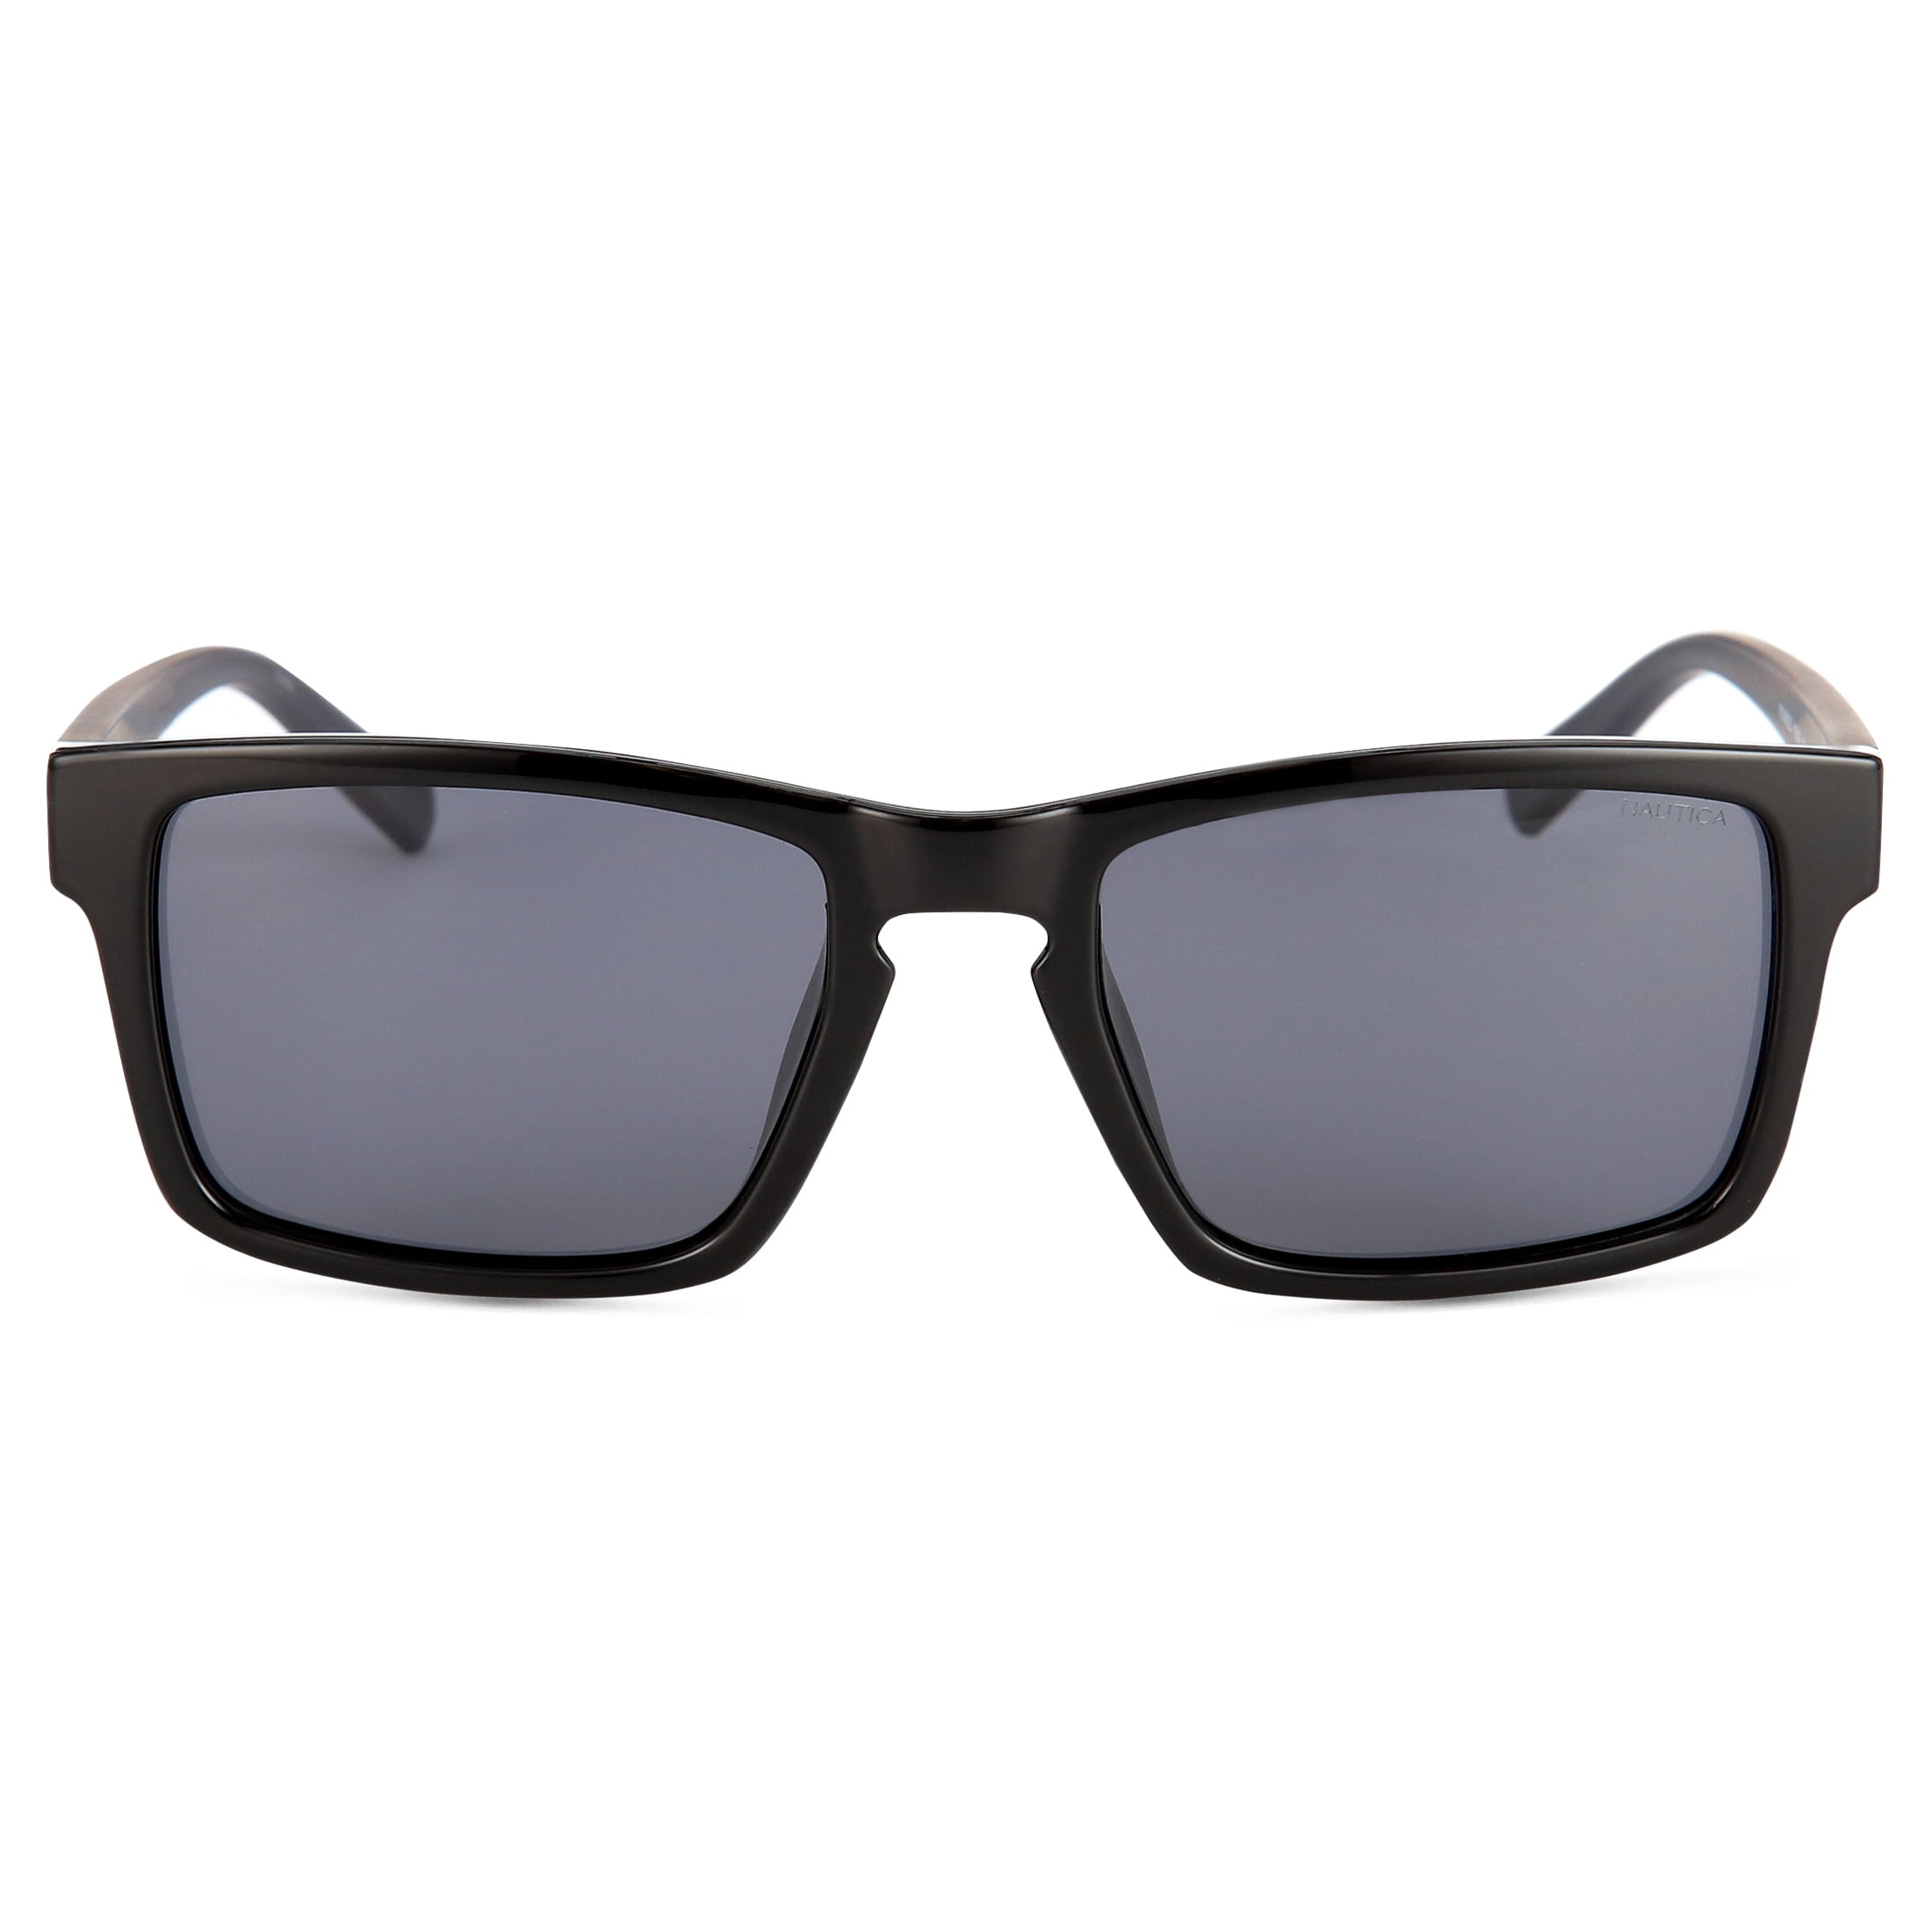 Round Sunglasses with Brow Bar | Nautica